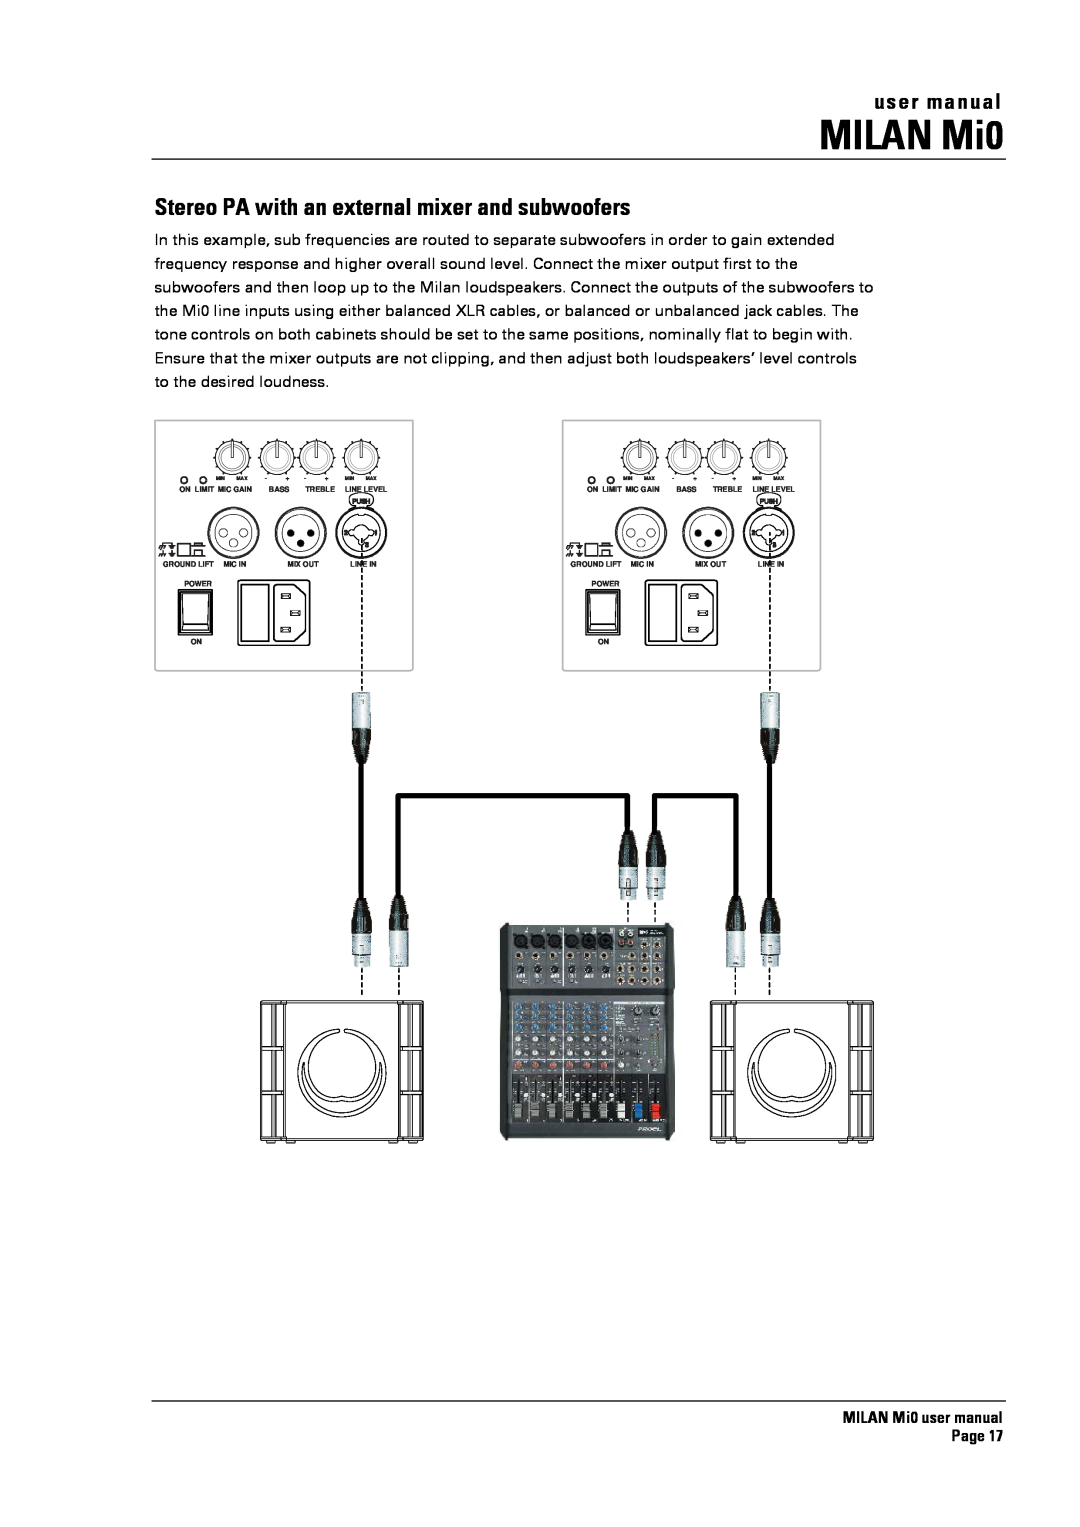 Turbosound Milan Mi0 manual Stereo PA with an external mixer and subwoofers, MILAN Mi0 